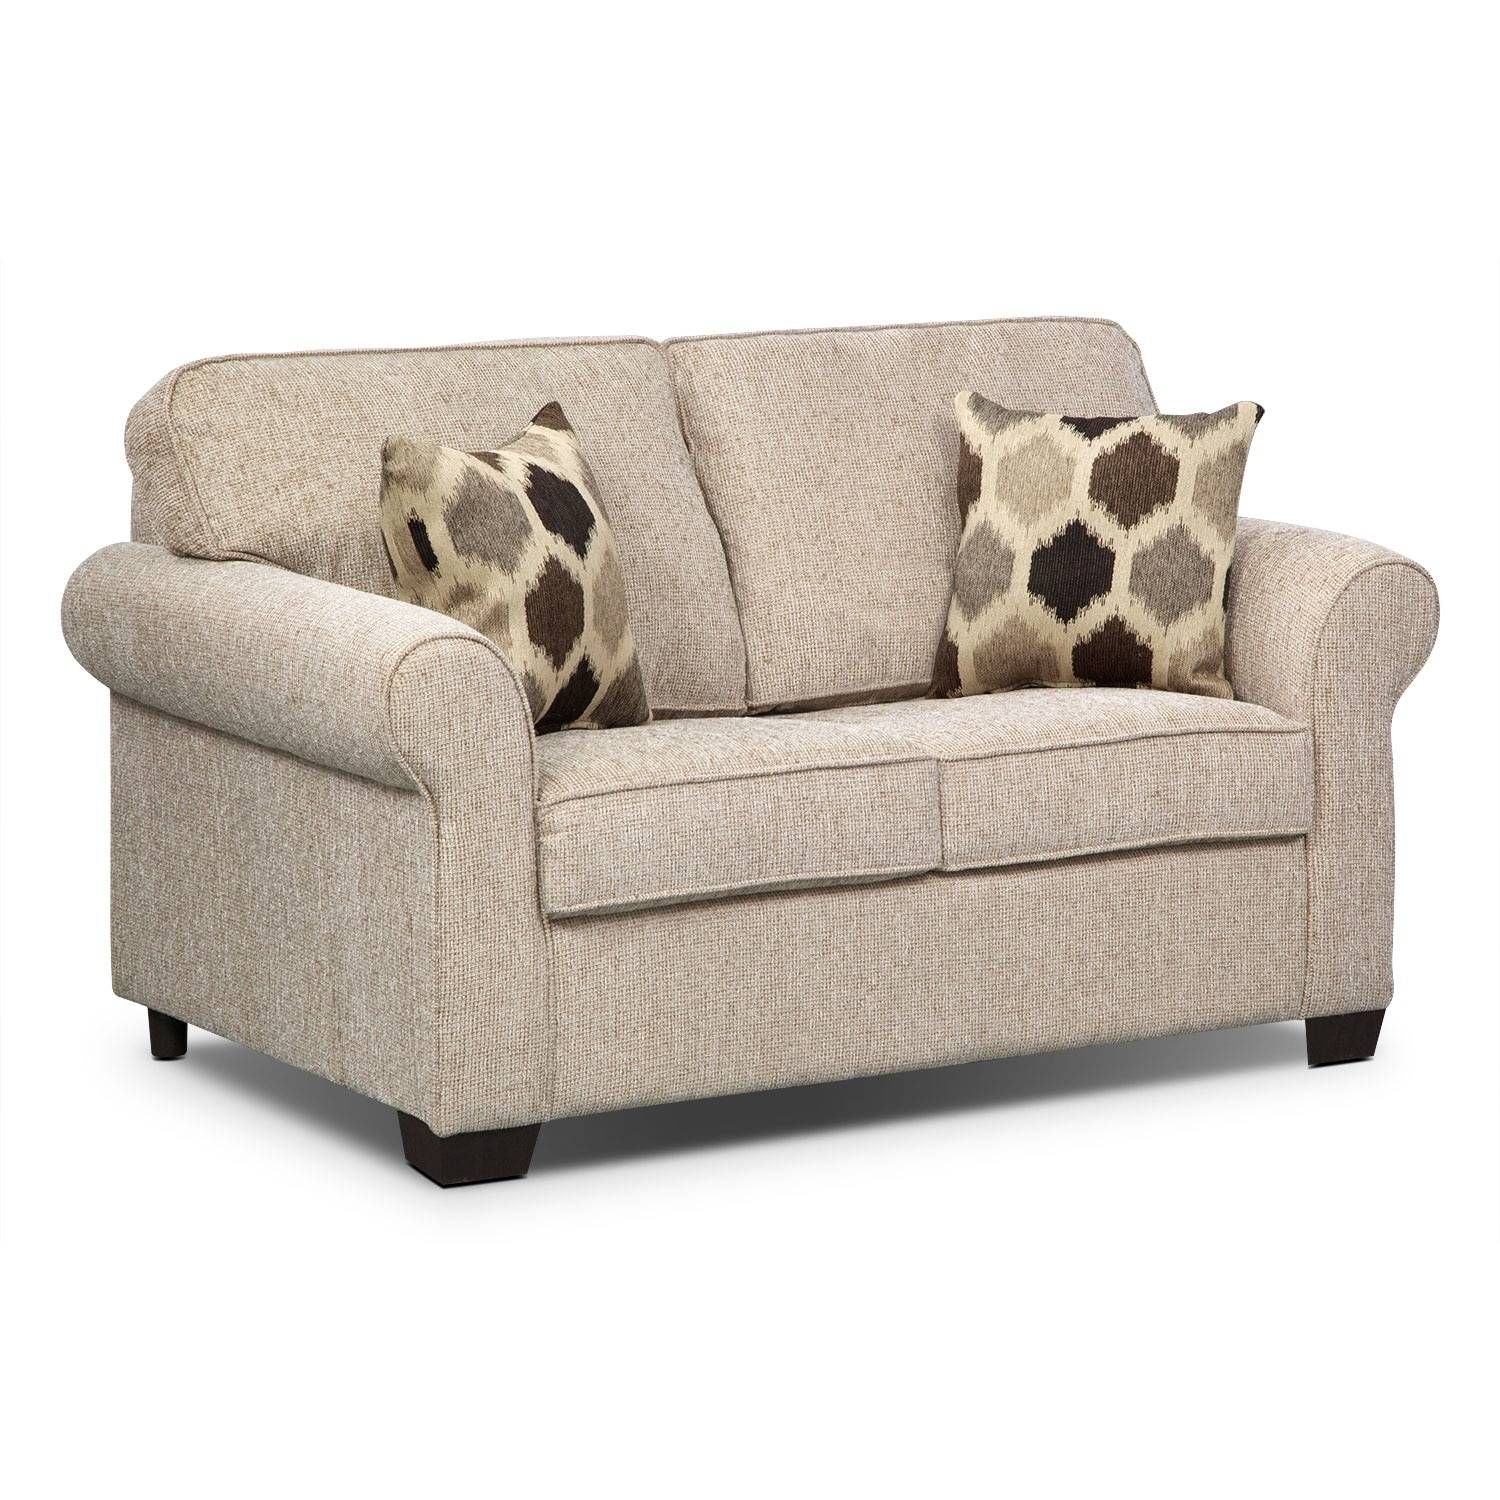 Fletcher Twin Memory Foam Sleeper Sofa – Beige | Value City Furniture Throughout Loveseat Twin Sleeper Sofas (View 6 of 30)